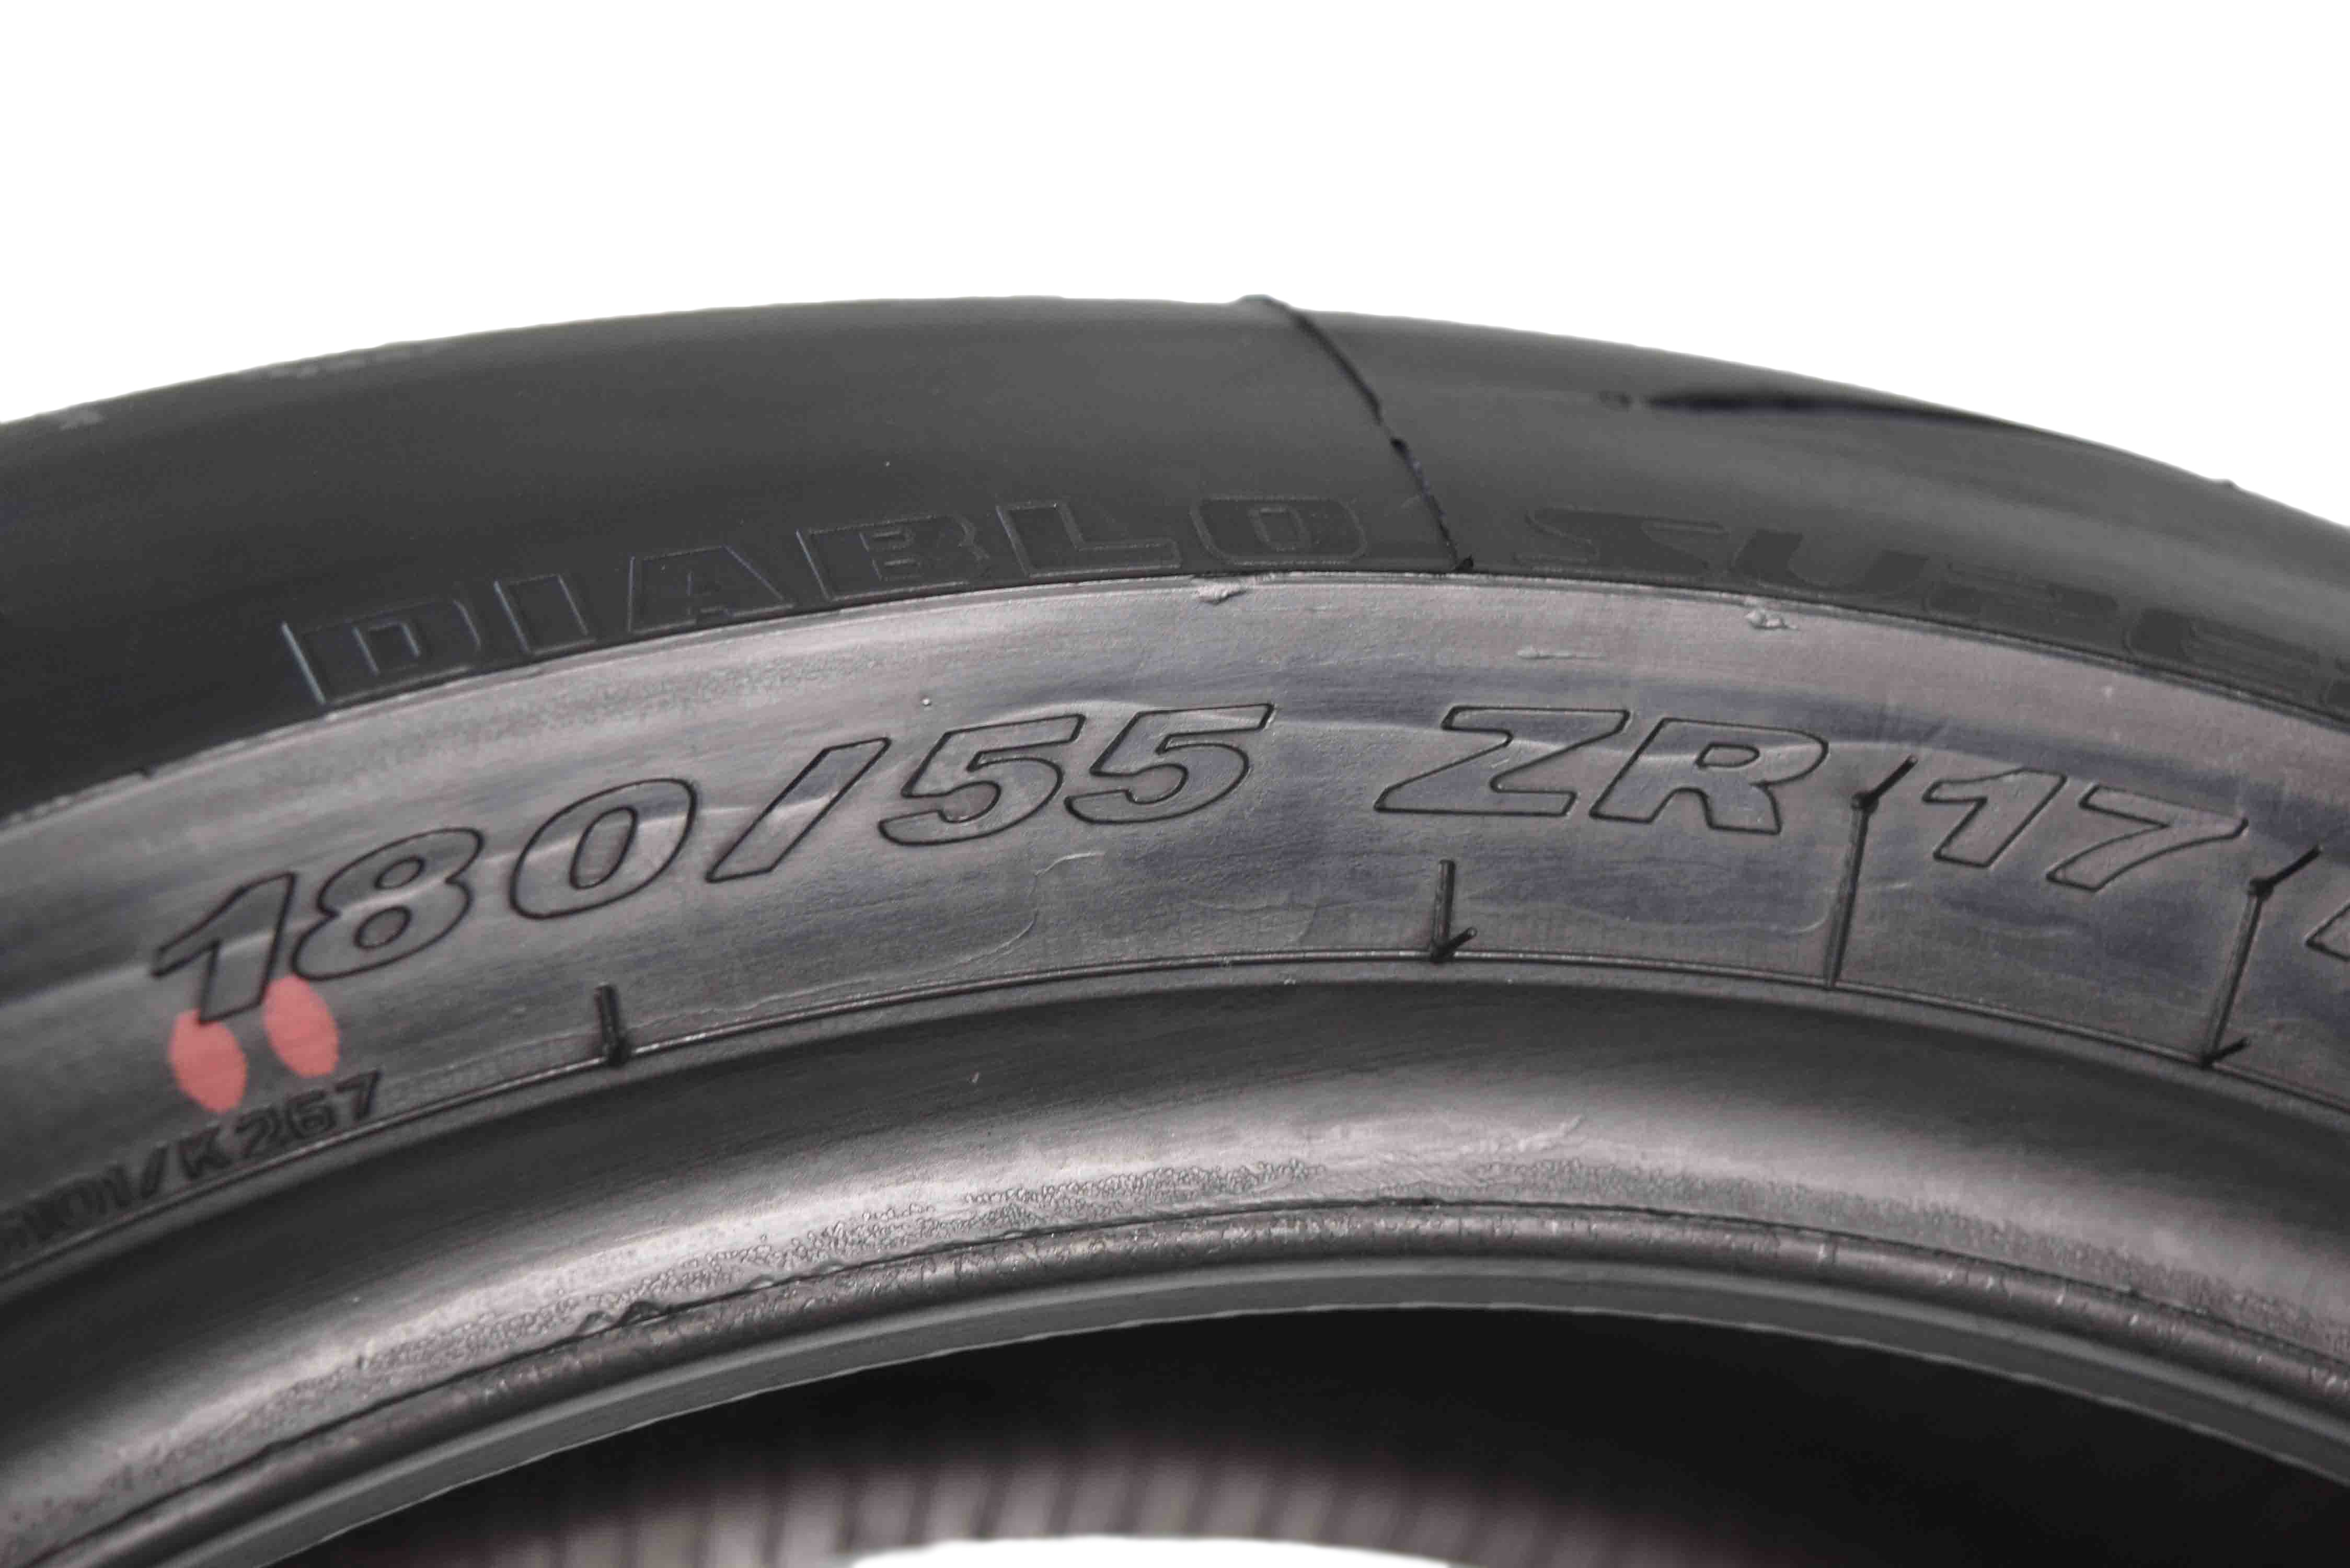 Pirelli-Tire-180-55ZR17-SUPER-CORSA-V2-Radial-Motorcycle-Rear-Tire-180-55-17-image-6